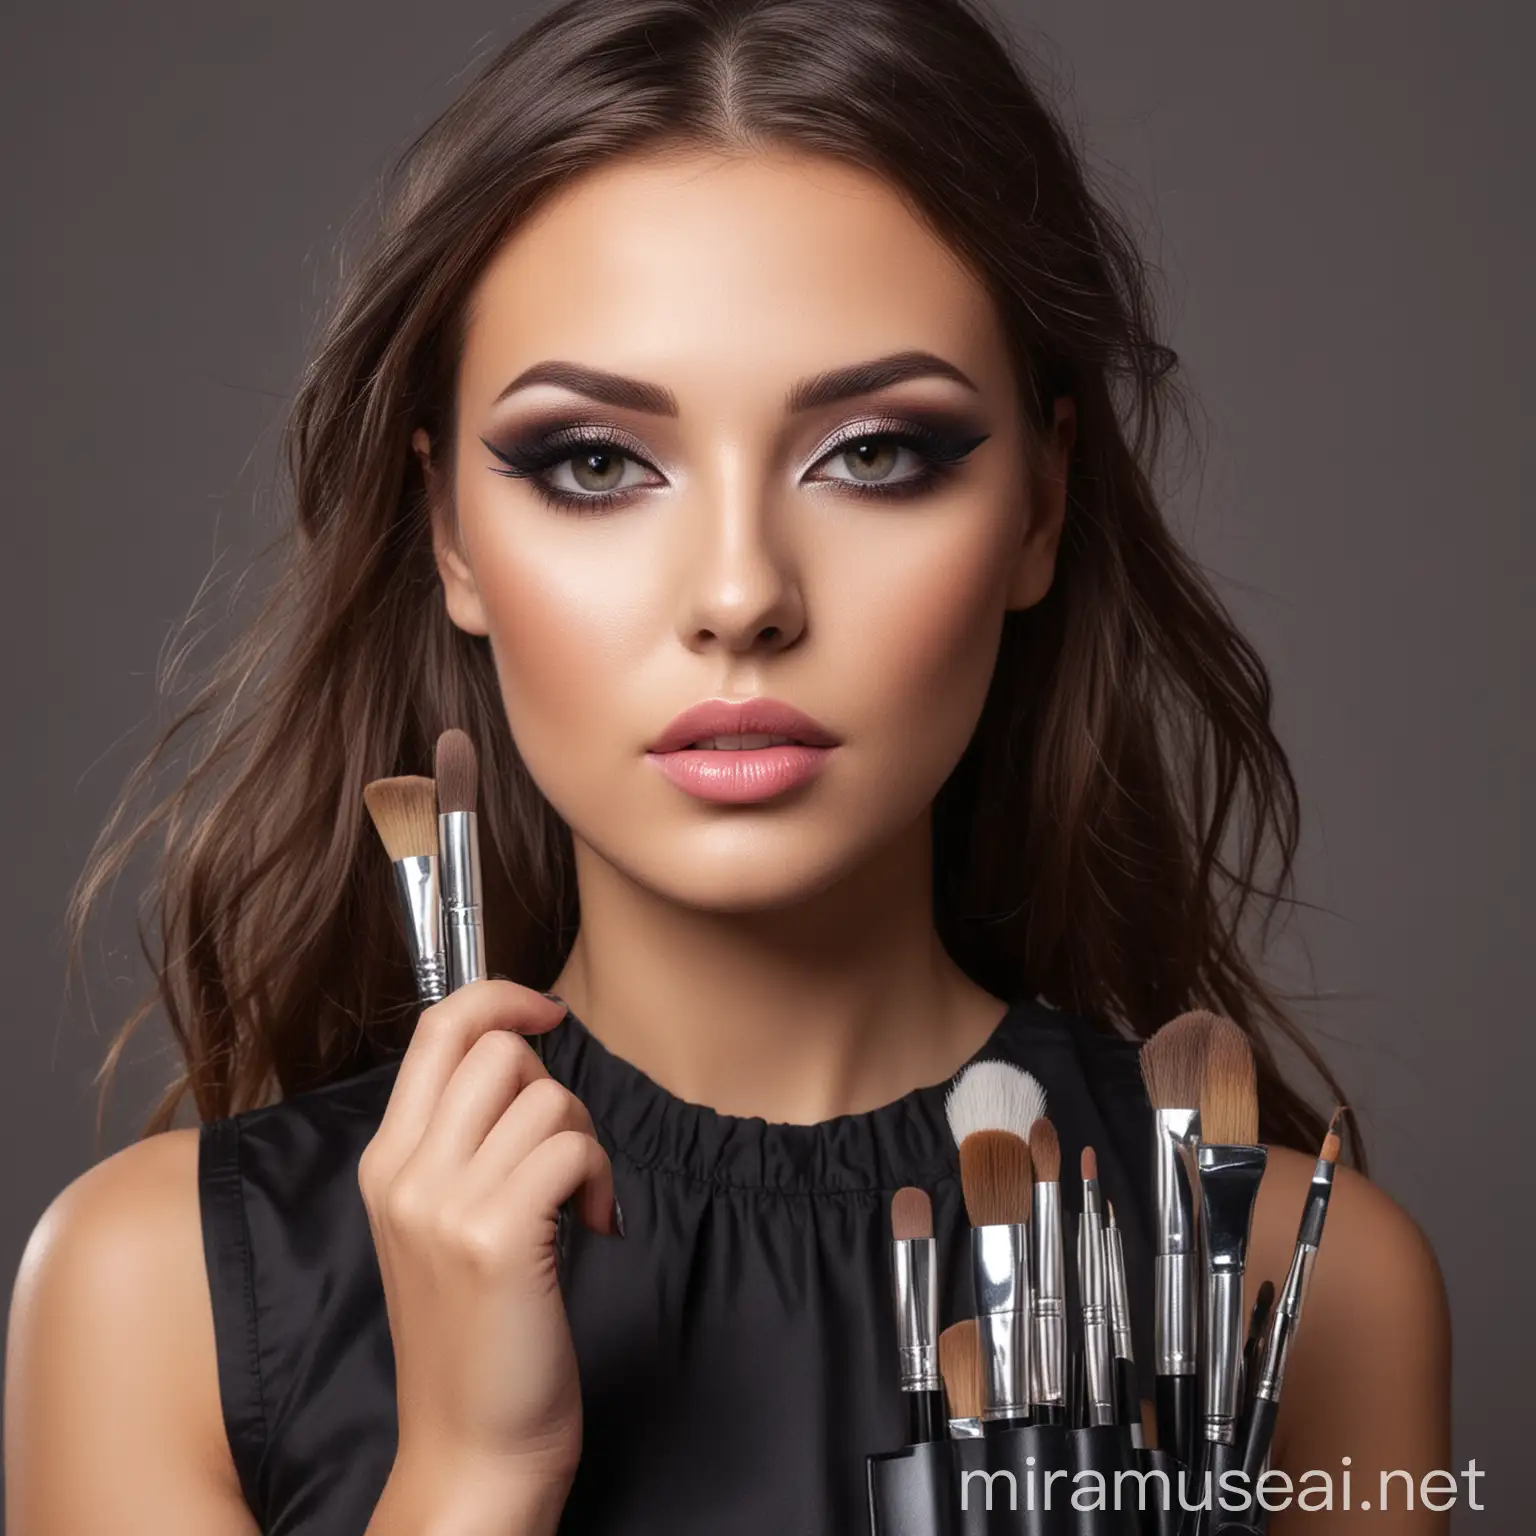 Young Makeup Artist Girl Applying Cosmetics Professionally